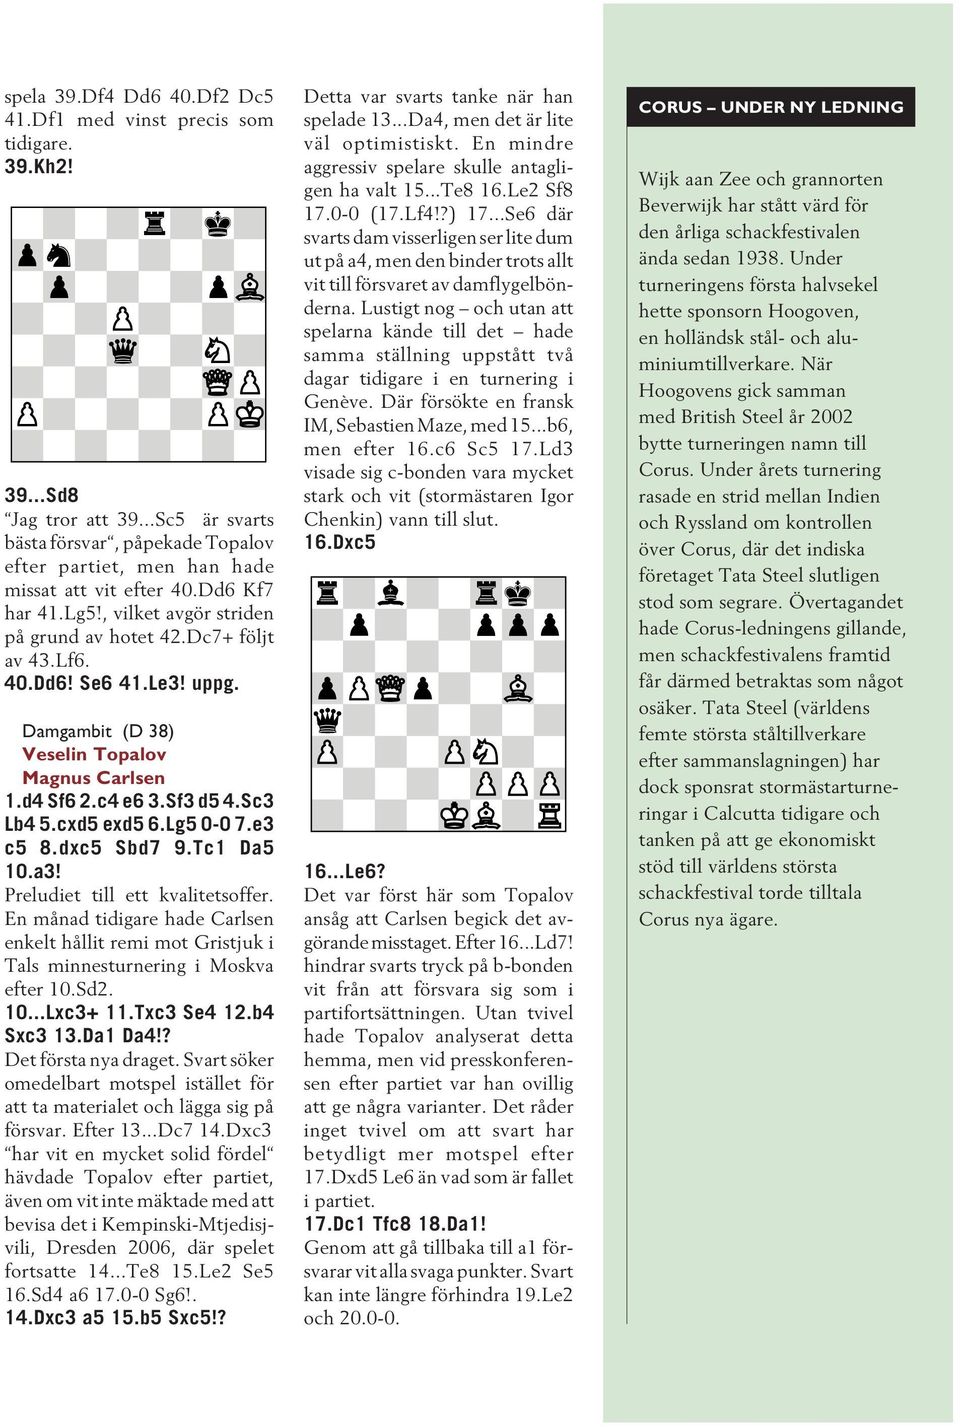 cxd5 exd5 6.Lg5 0-0 7.e3 c5 8.dxc5 Sbd7 9.Tc1 Da5 10.a3! Preludiet till ett kvalitetsoffer. En månad tidigare hade Carlsen enkelt hållit remi mot Gristjuk i Tals minnesturnering i Moskva efter 10.Sd2.